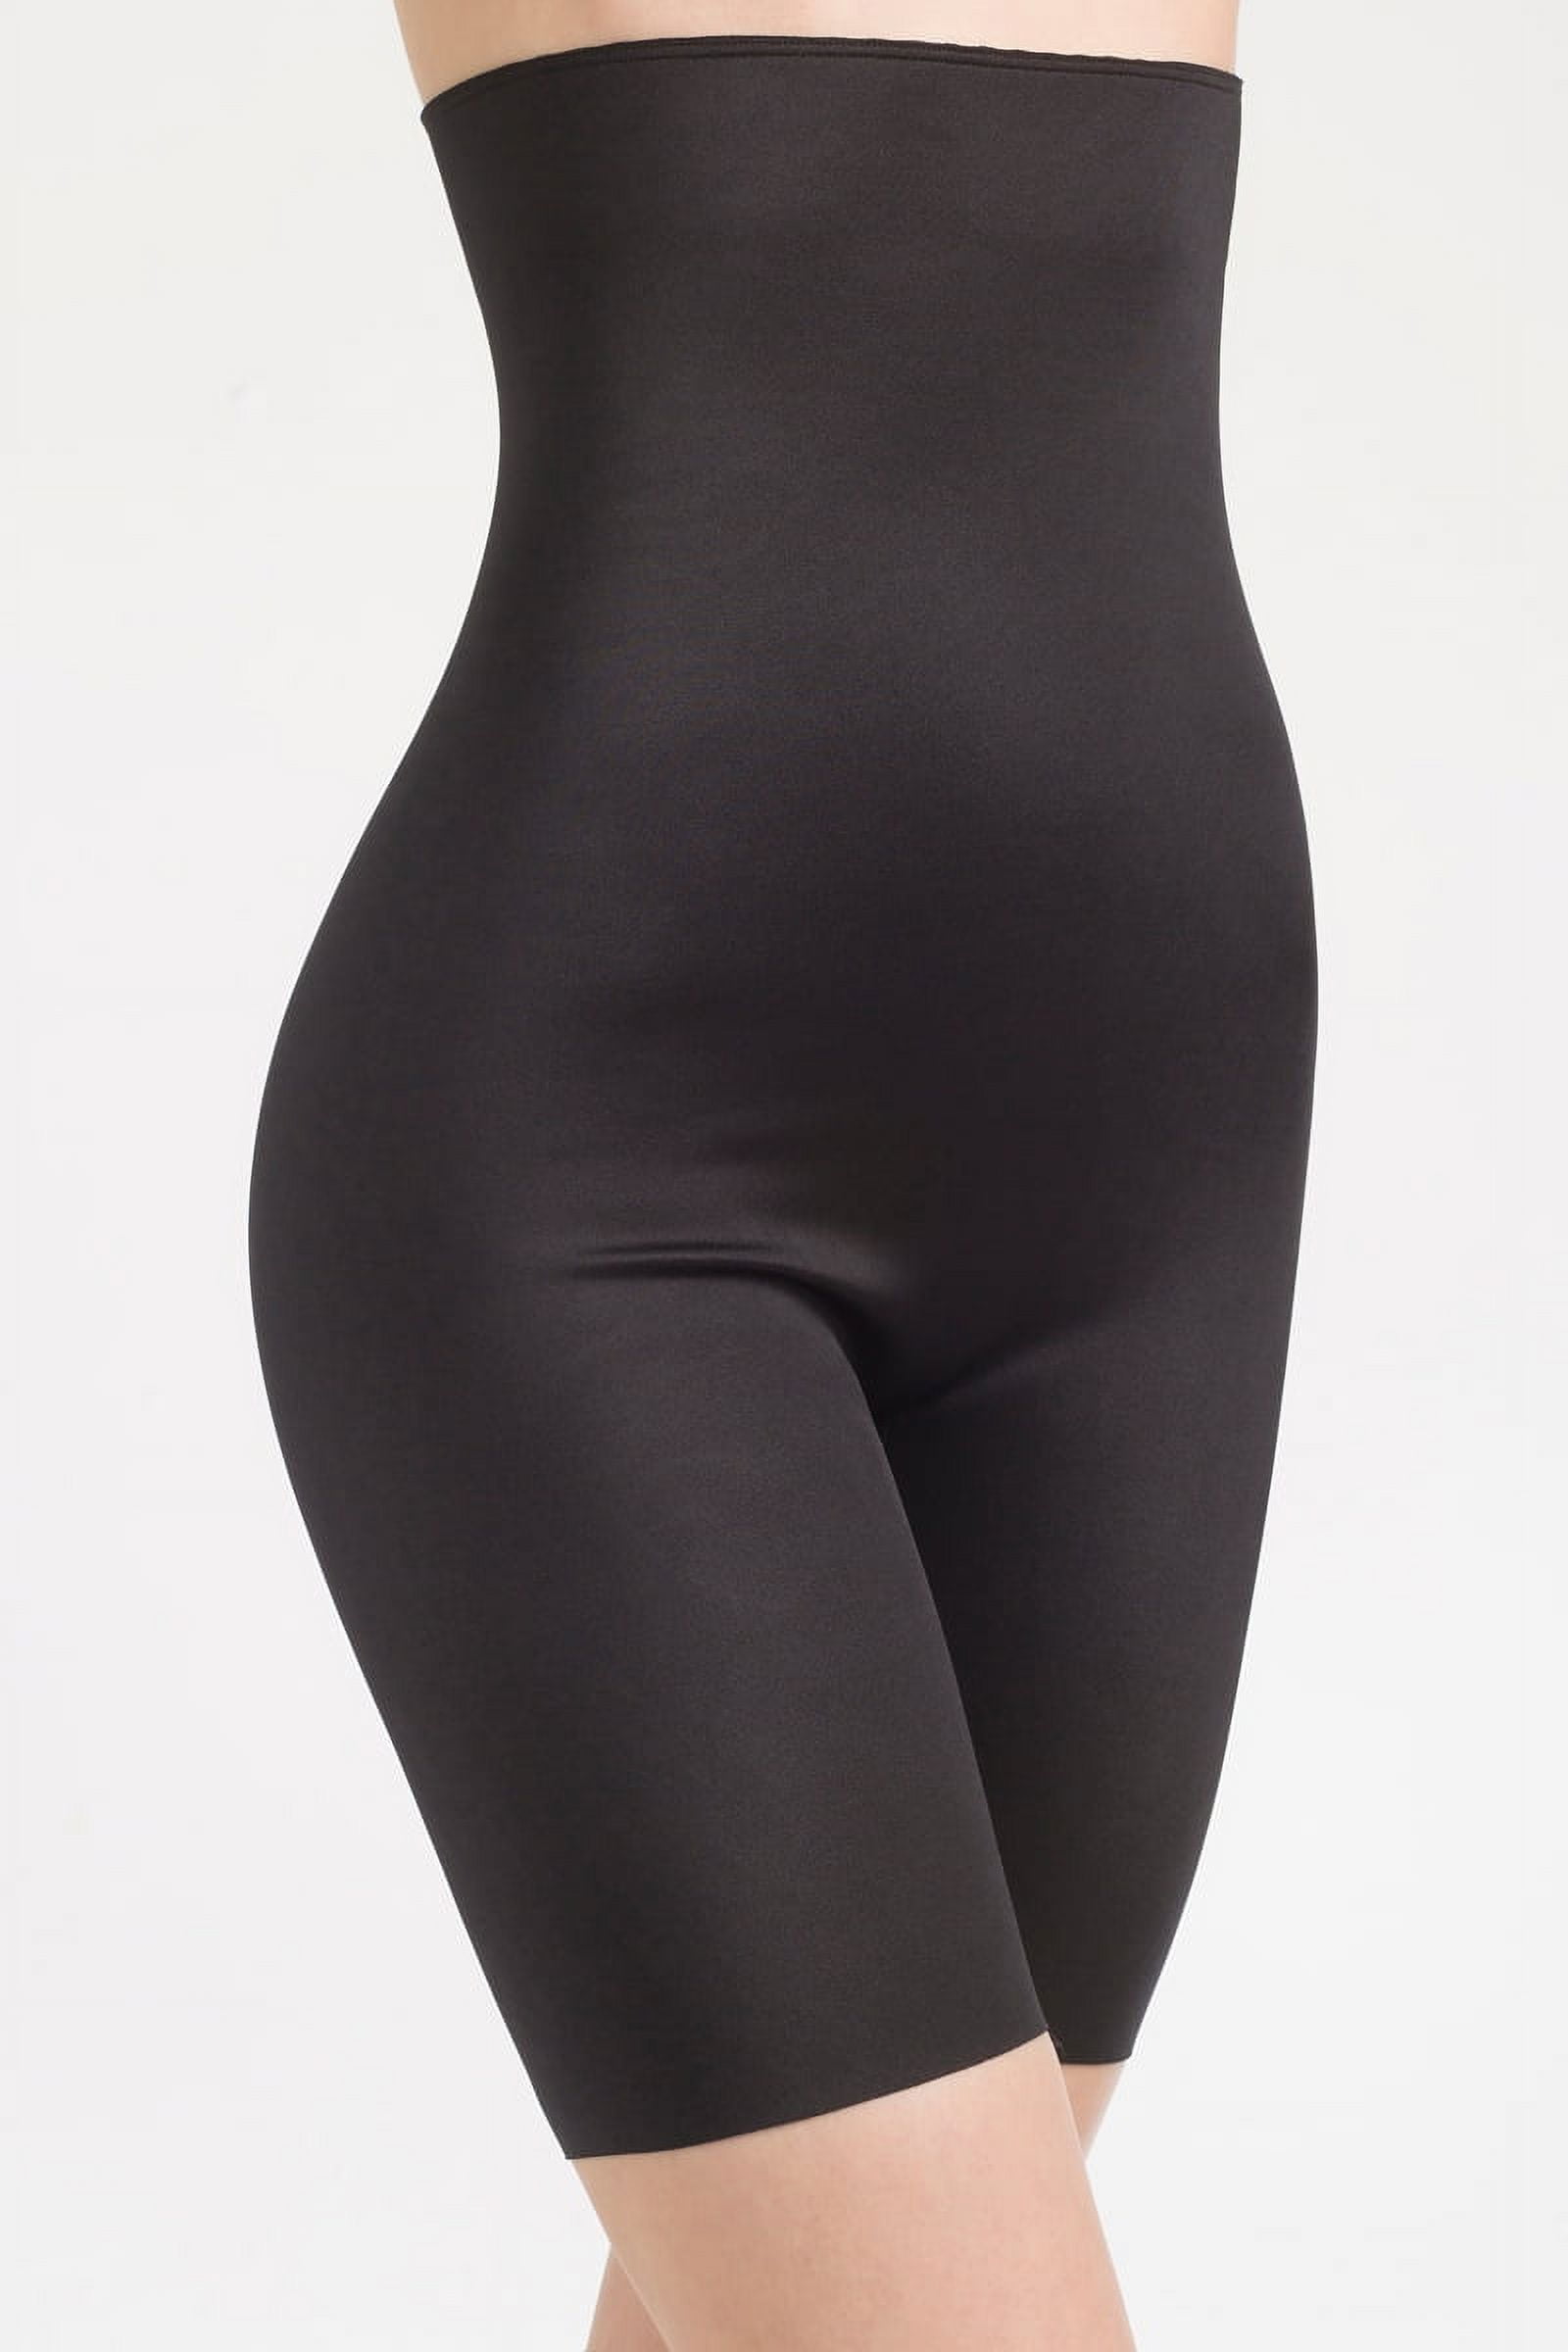 Shapewear for Women Tummy Control Fajas Colombianas Body Shaper Open Crotch  Bodysuit Thigh Slimmer Butt Lifting Shorts